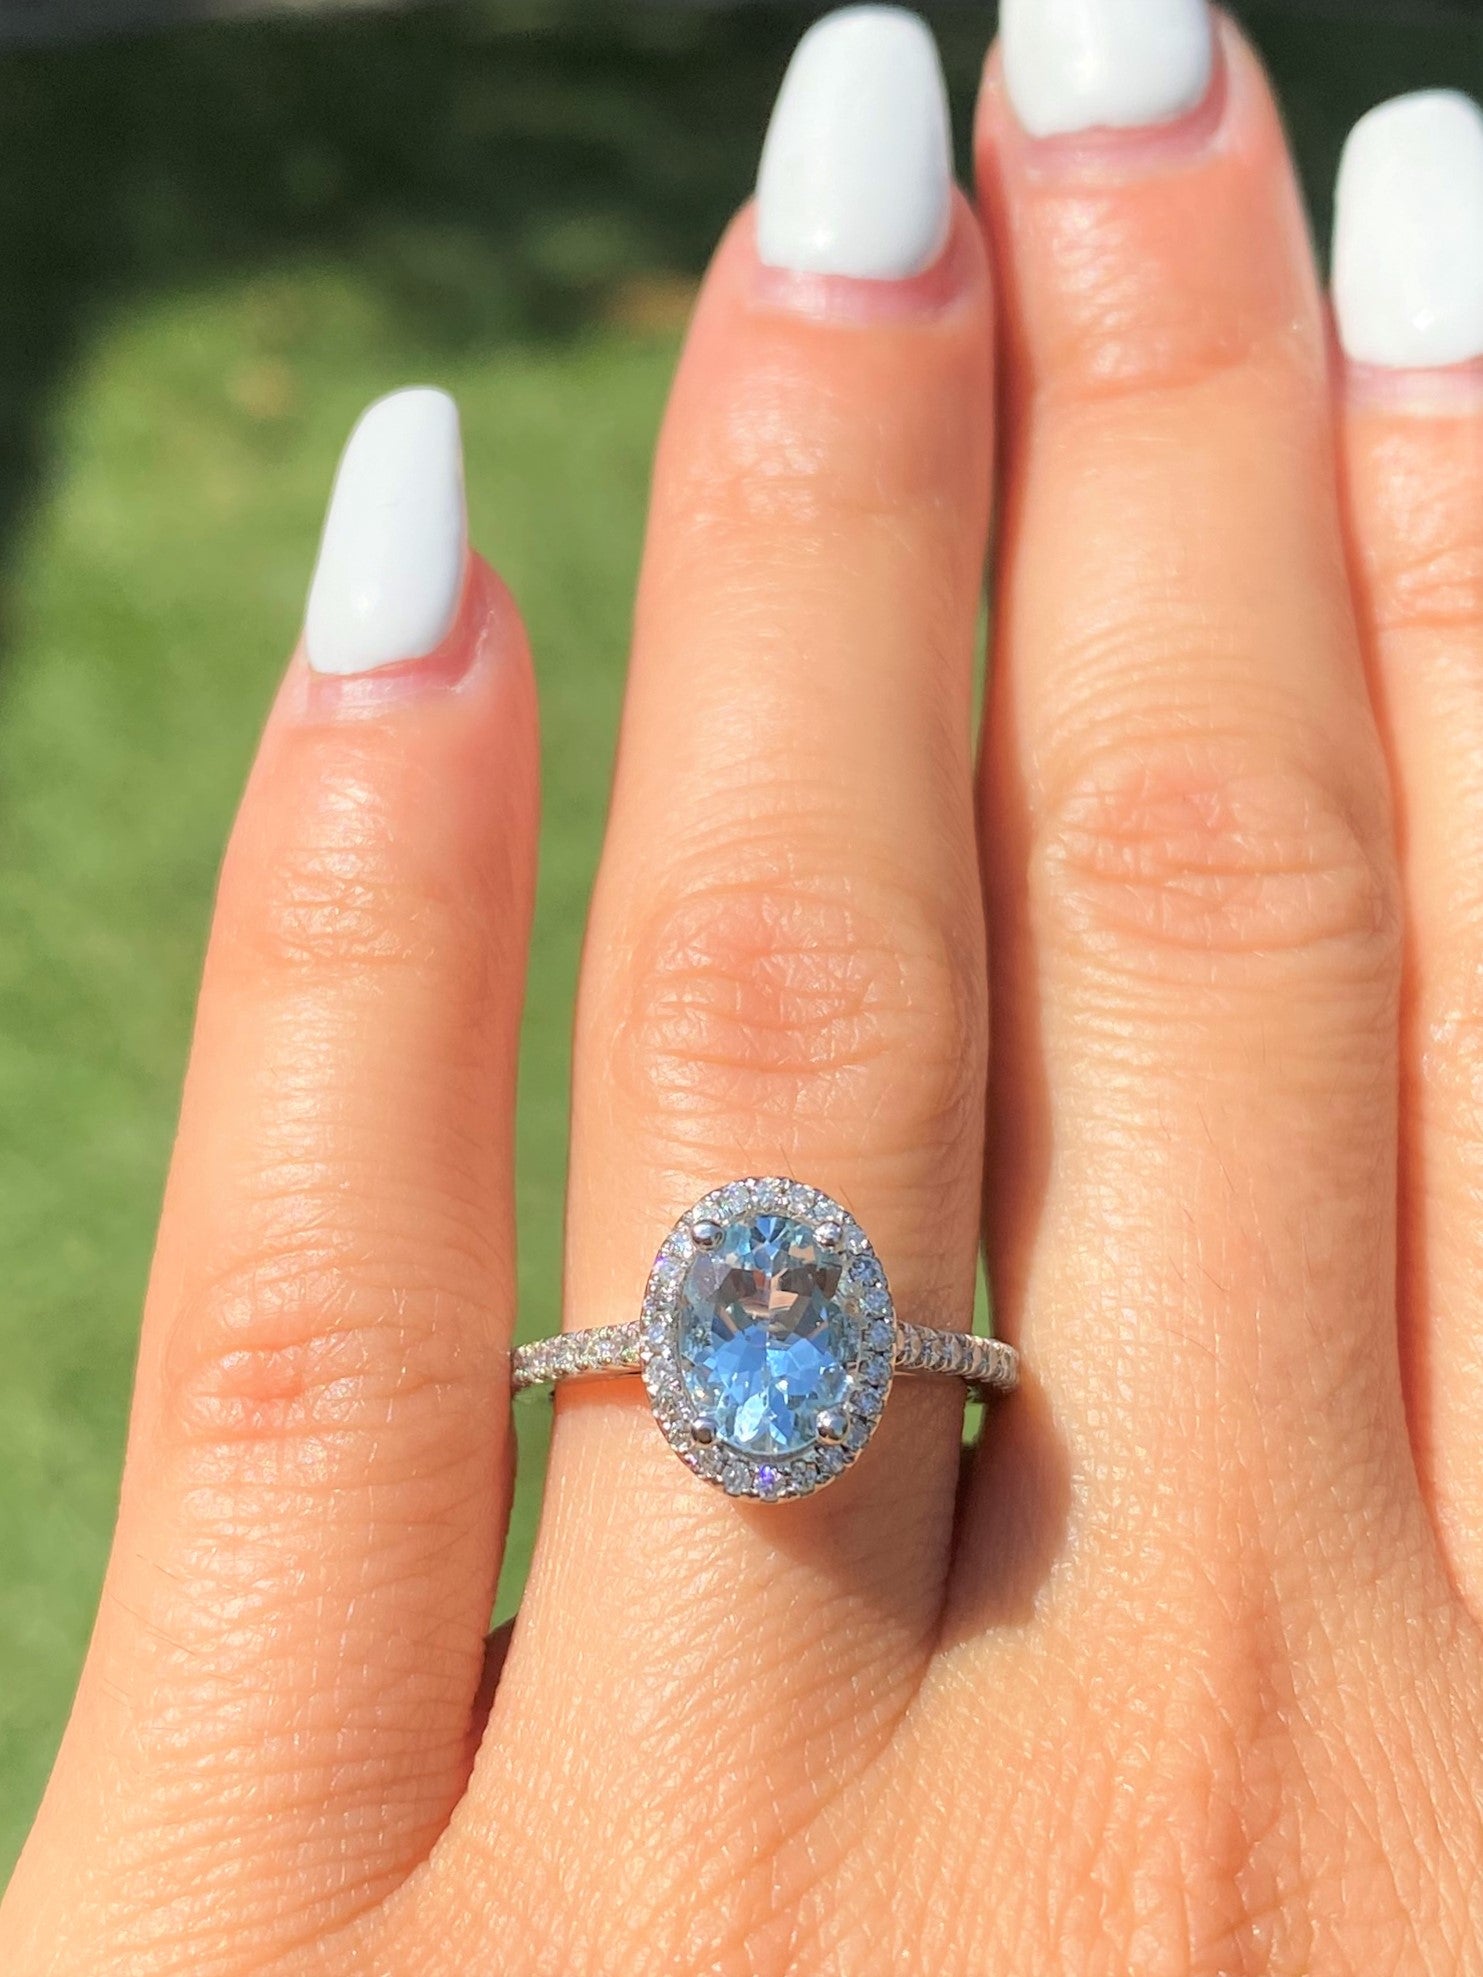 Diamond and Aquamarine 3 Stone Engagement Ring | Tillie | Braverman Jewelry